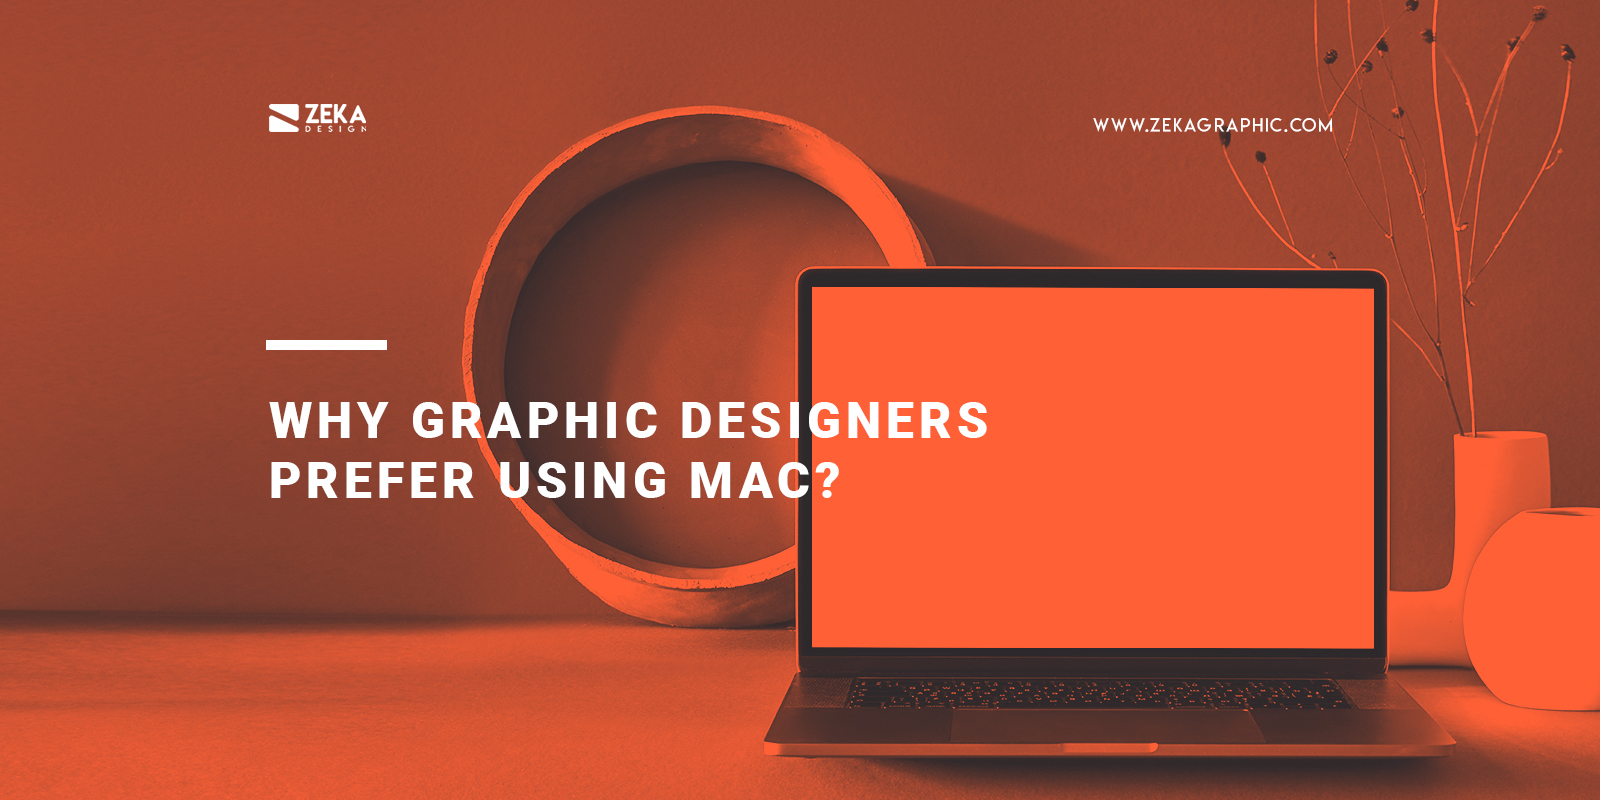 best mac laptops for graphic design under $1500